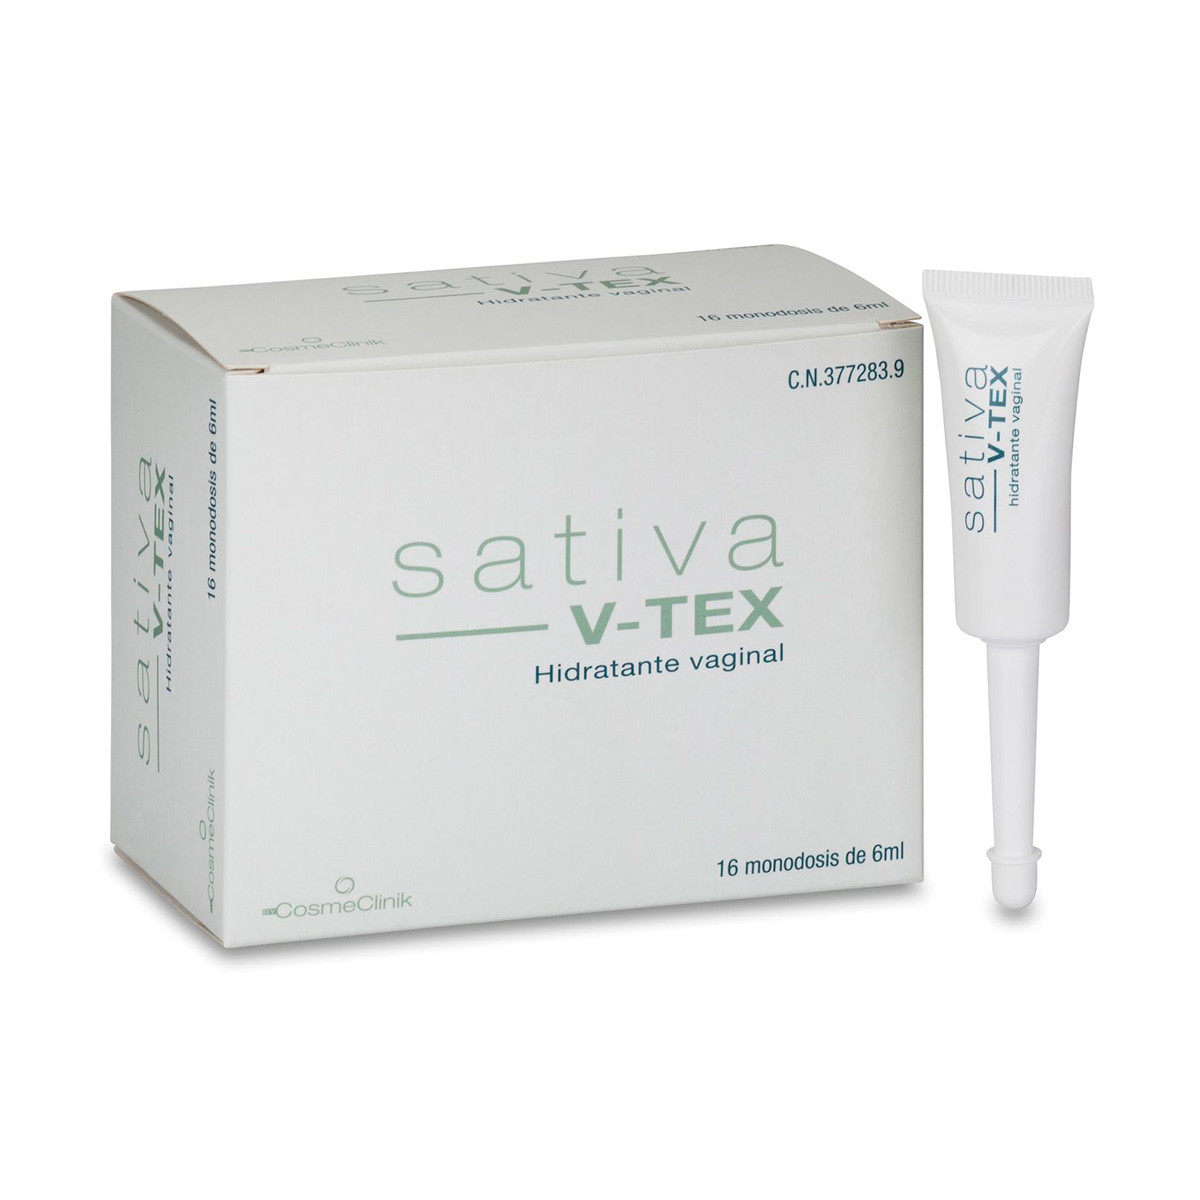 Imagen de Sativa v-tex hidratante vaginal 16x6 ml